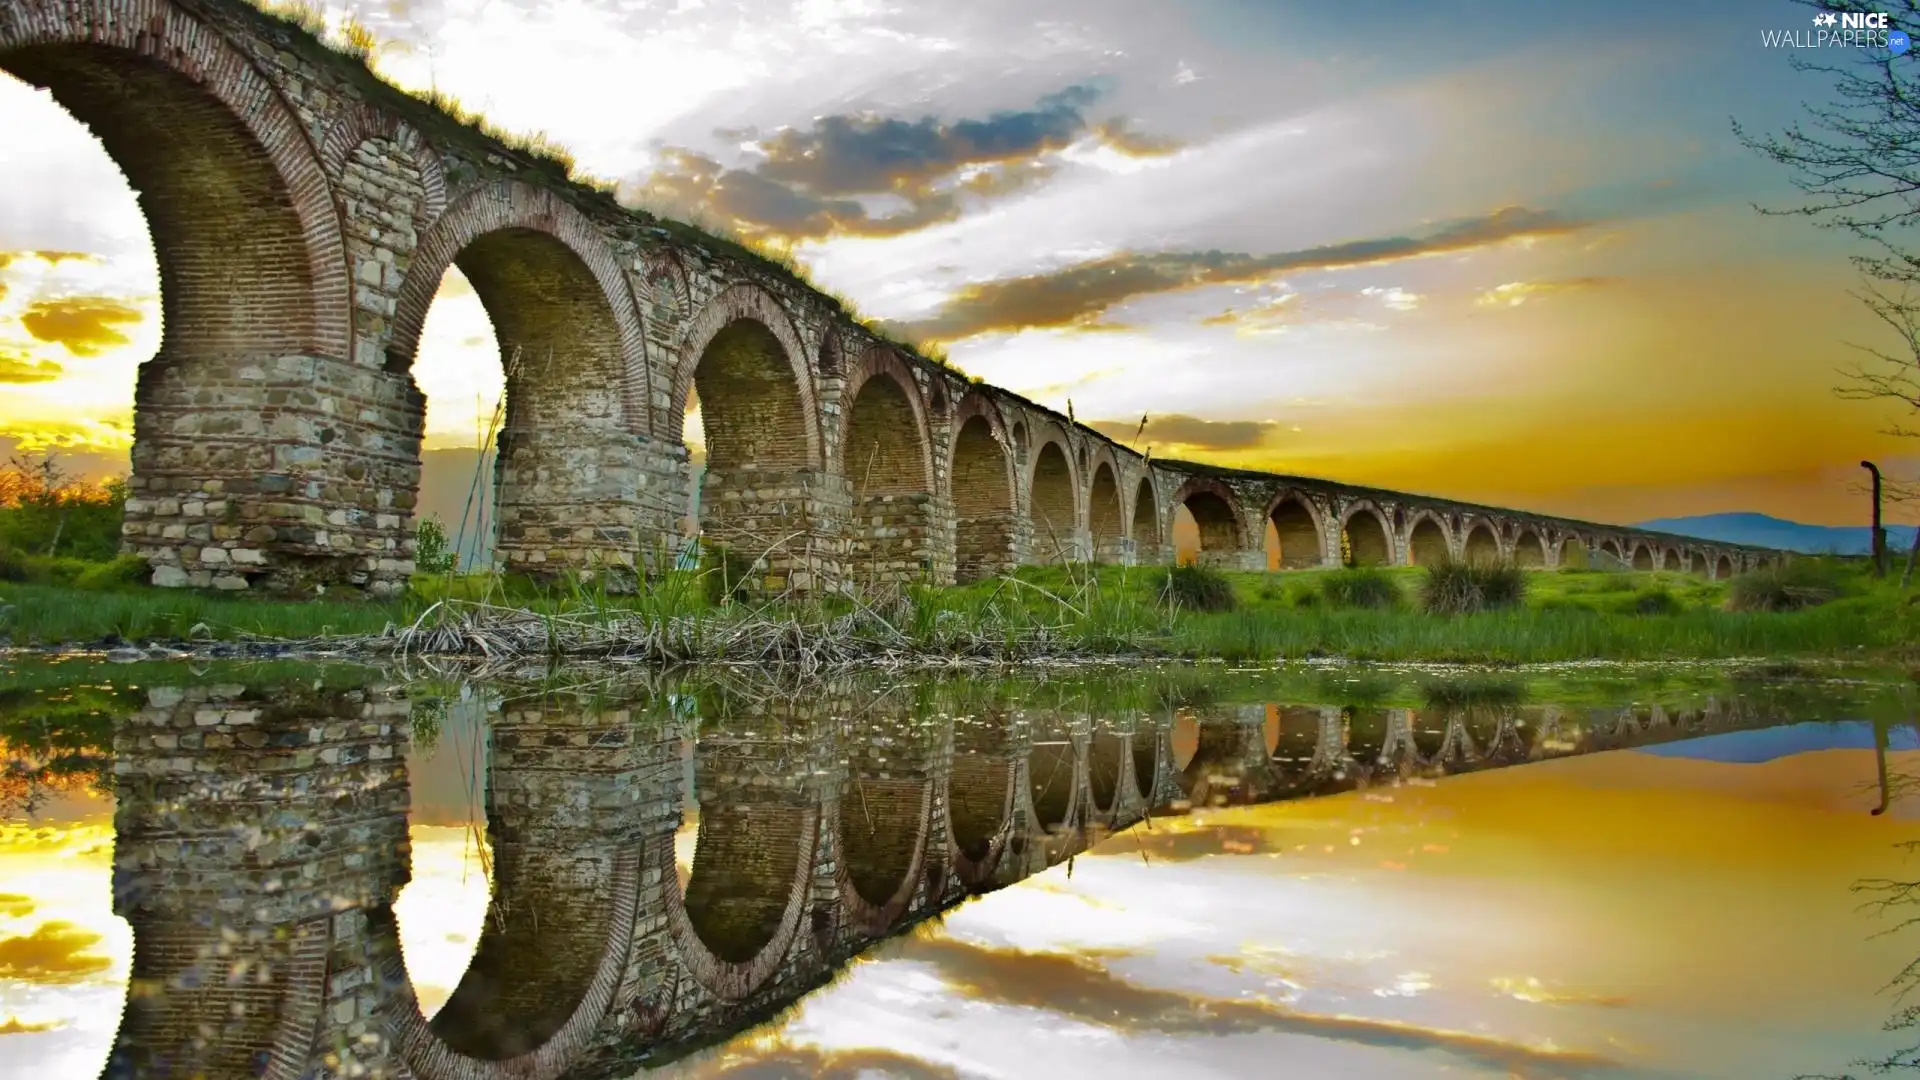 River, bridge, reflection